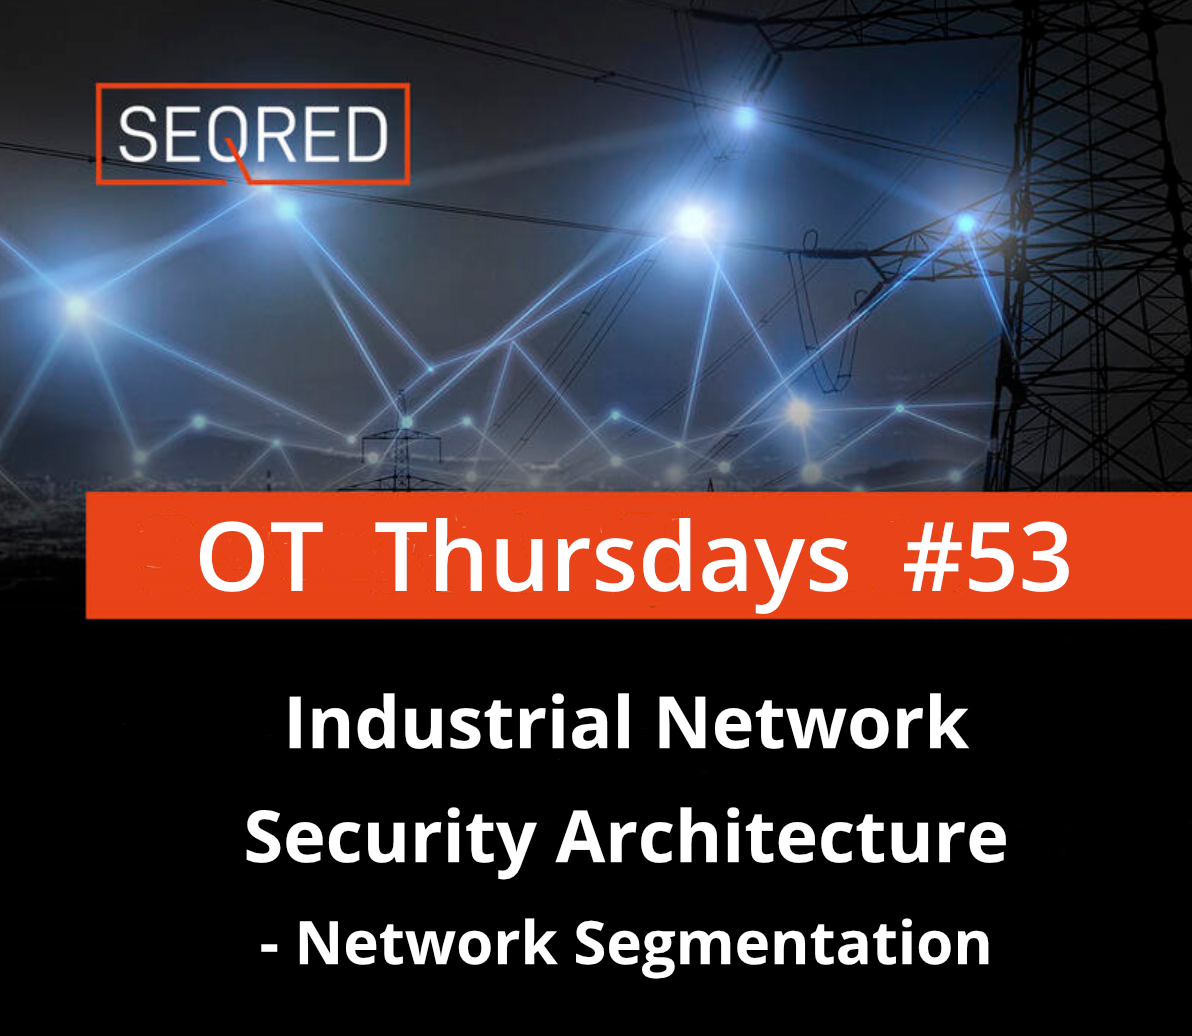 Industrial Network Security Architecture - Network Segmentation